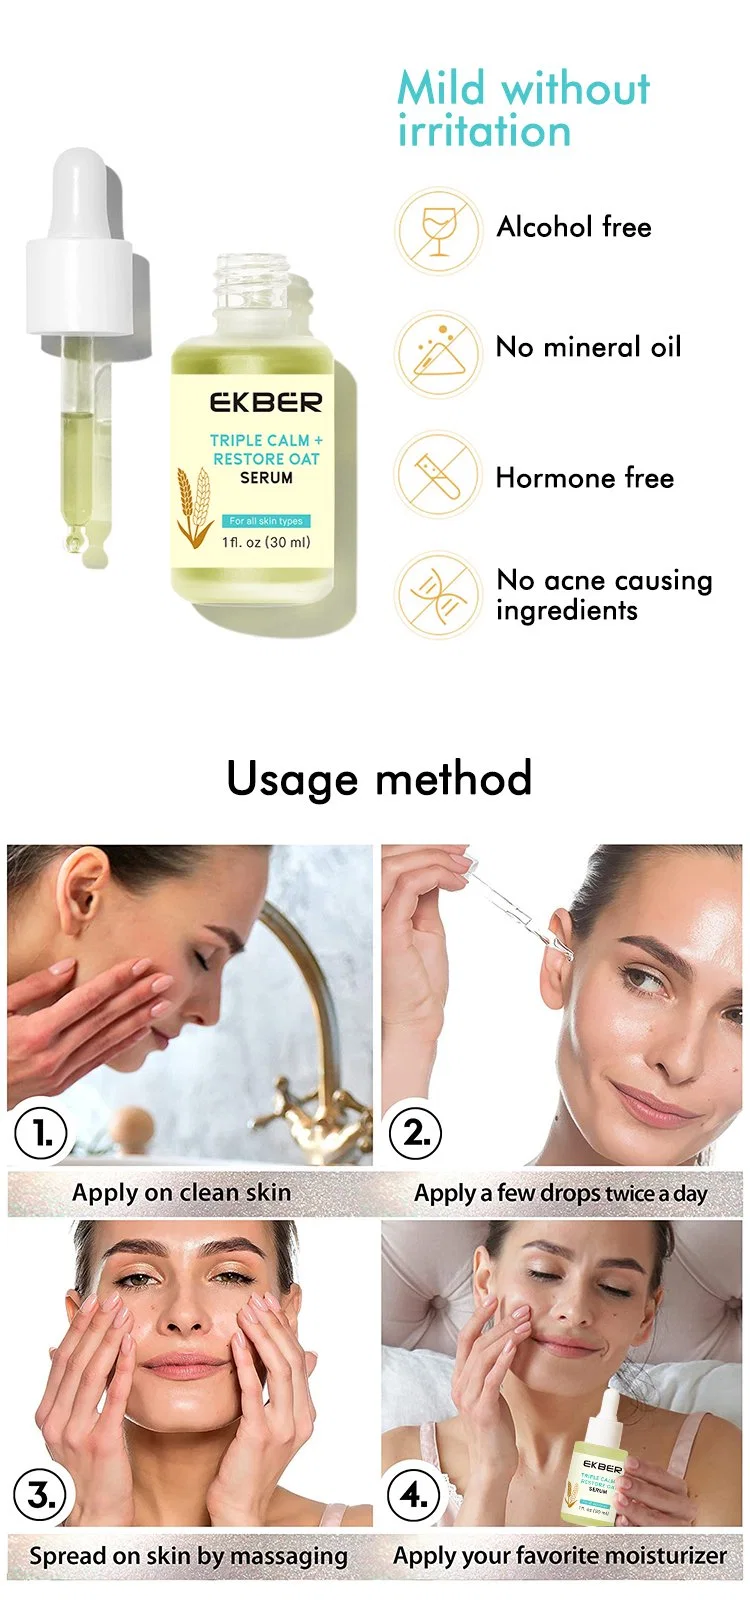 Amazon Hot Sale Ekber Organic Triple Calm and Sooth Oat Repair Face Serum Anti Aging Smooth Skin Care Facial Serum 30ml